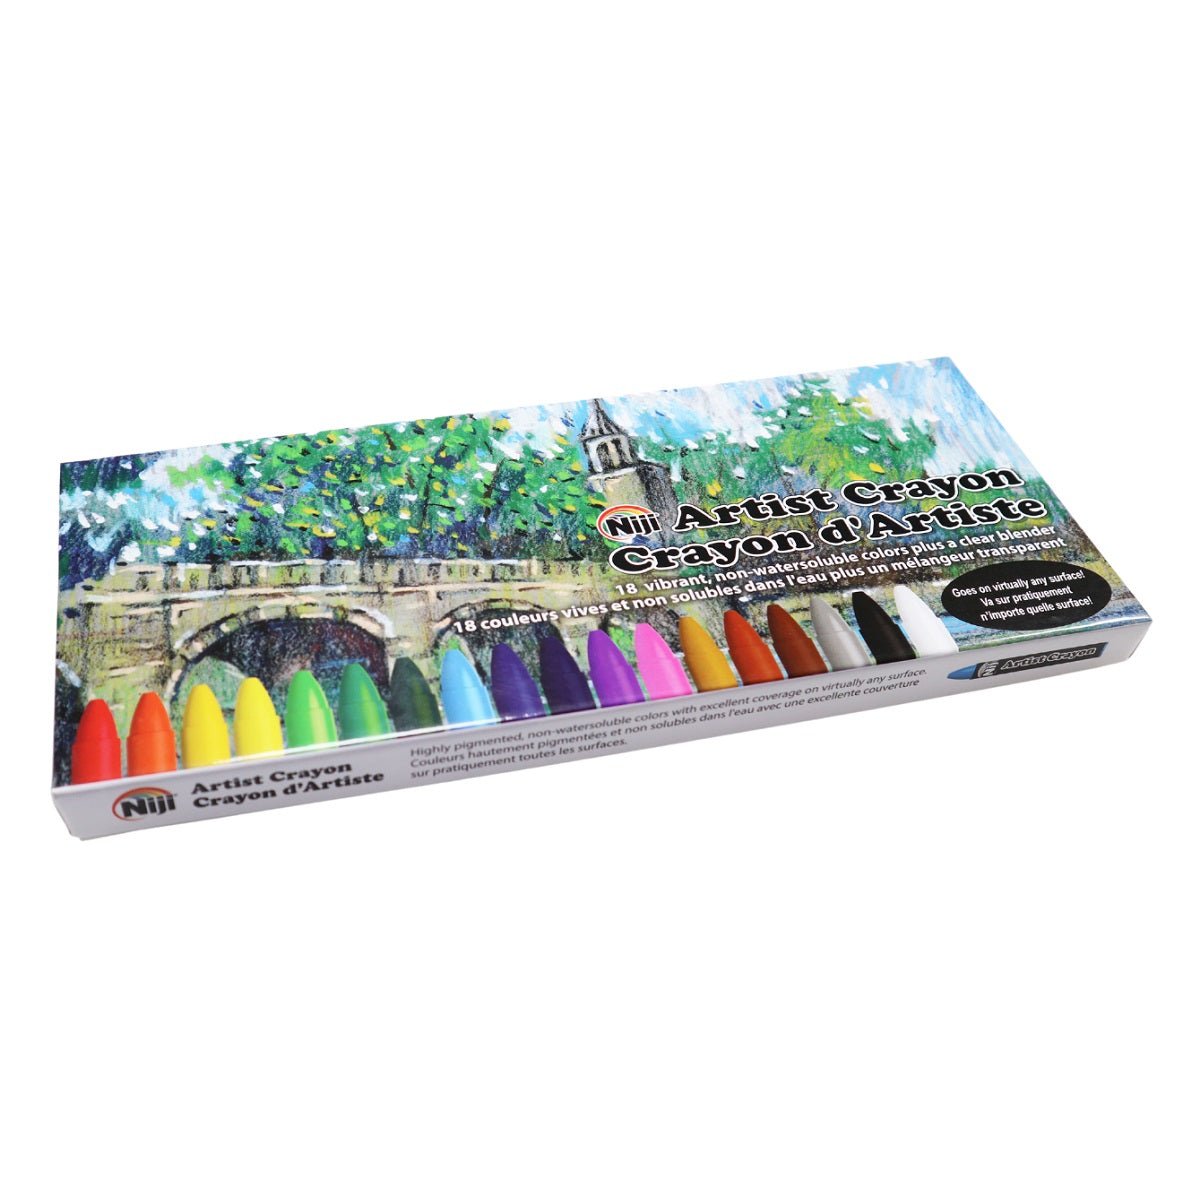 Yasutomo Niji Artist Crayons (Non Water Soluble) - 18 Colors - merriartist.com